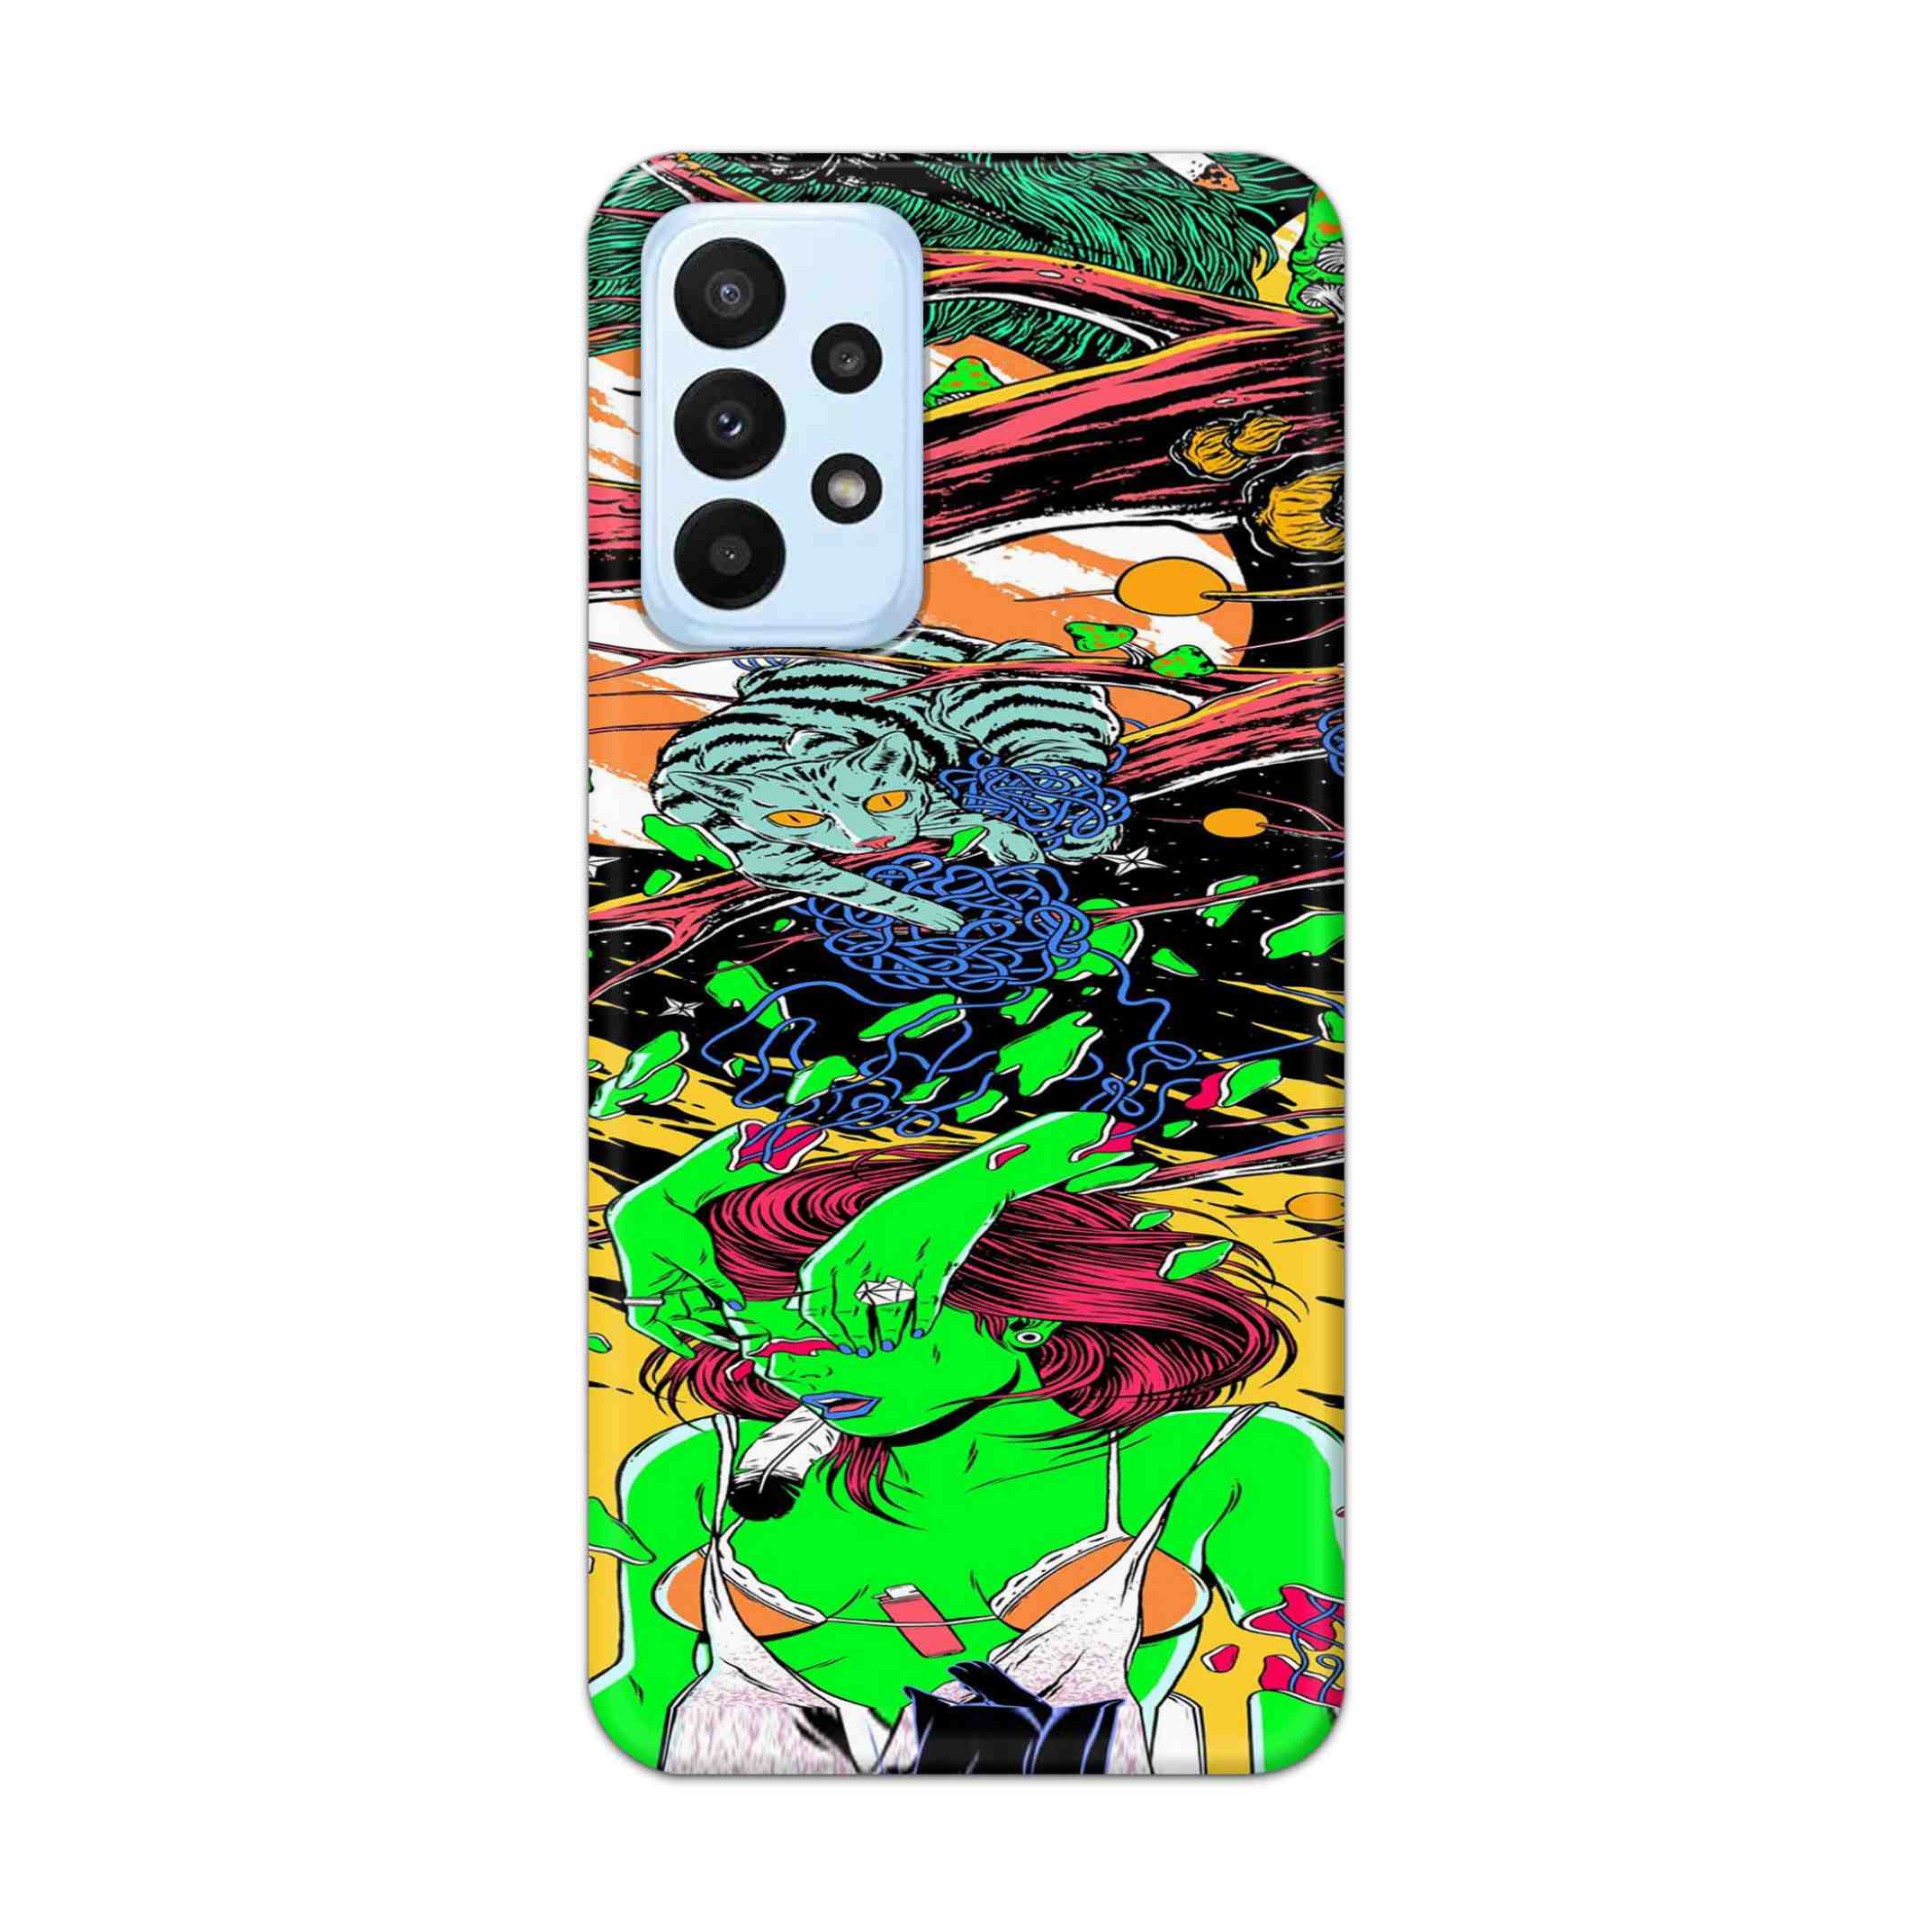 Buy Green Girl Art Hard Back Mobile Phone Case Cover For Samsung A23 Online